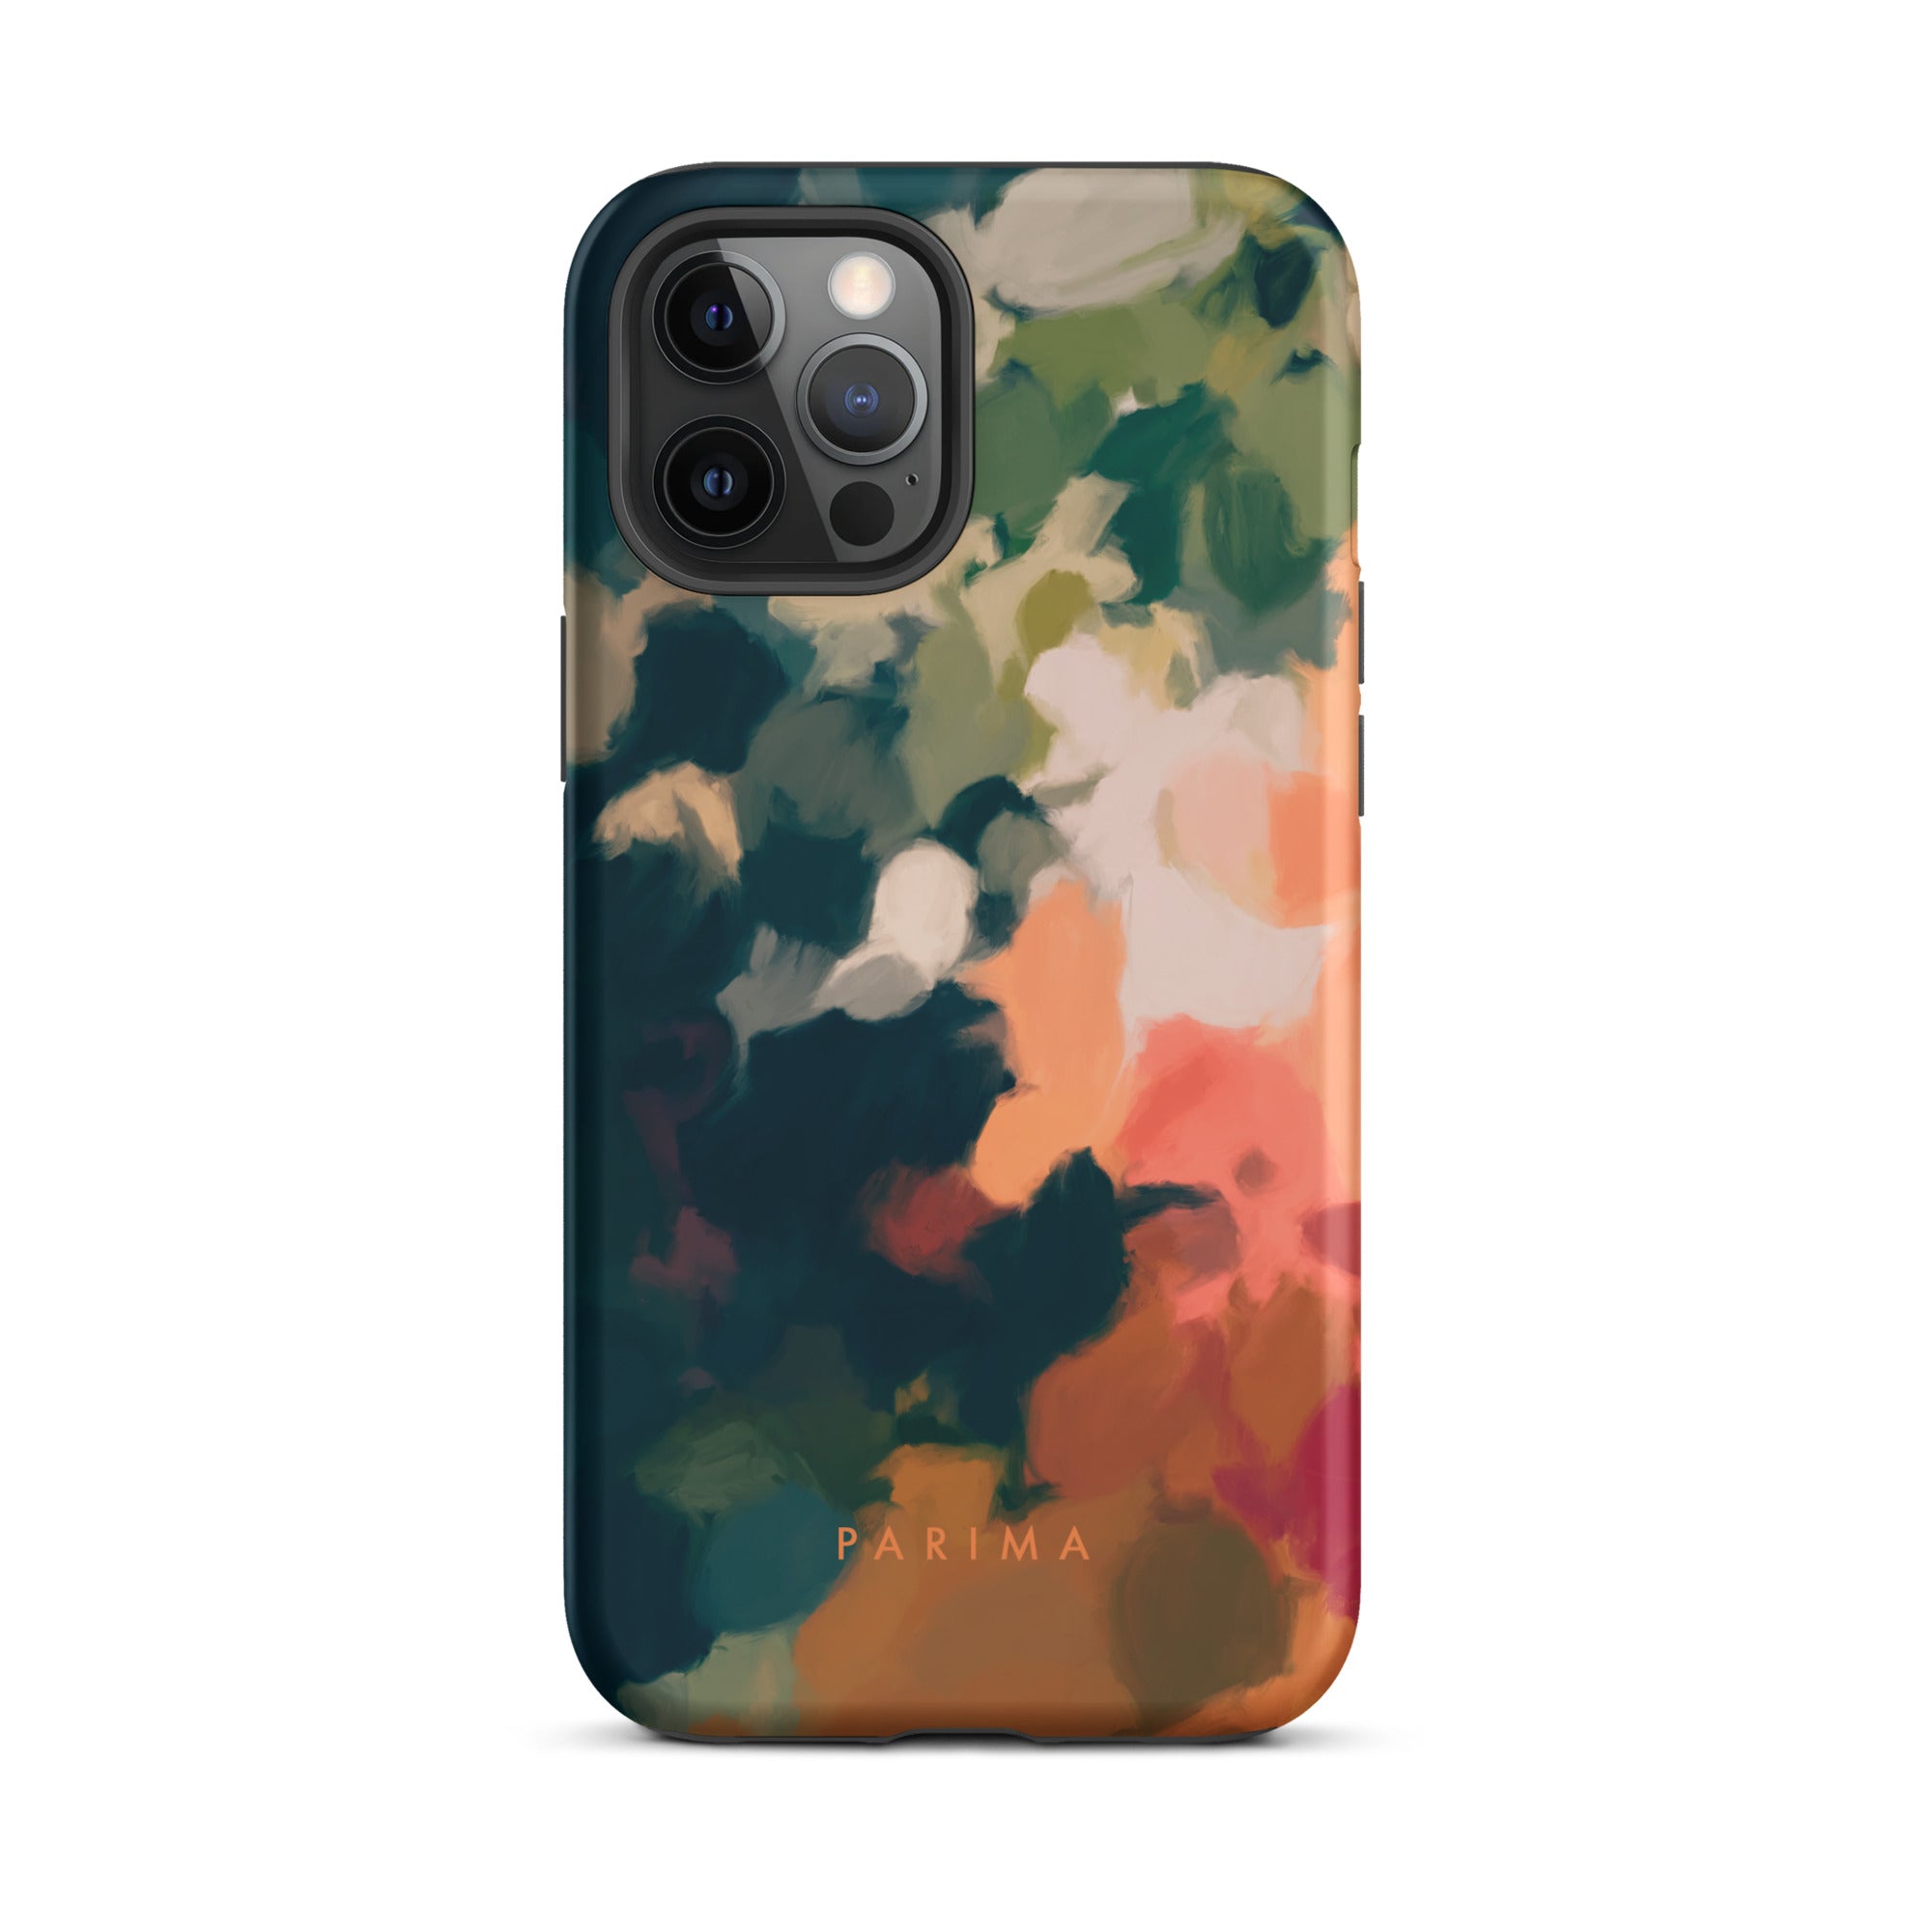 Ria, blue and orange abstract art - iPhone 12 Pro Max tough case by Parima Studio